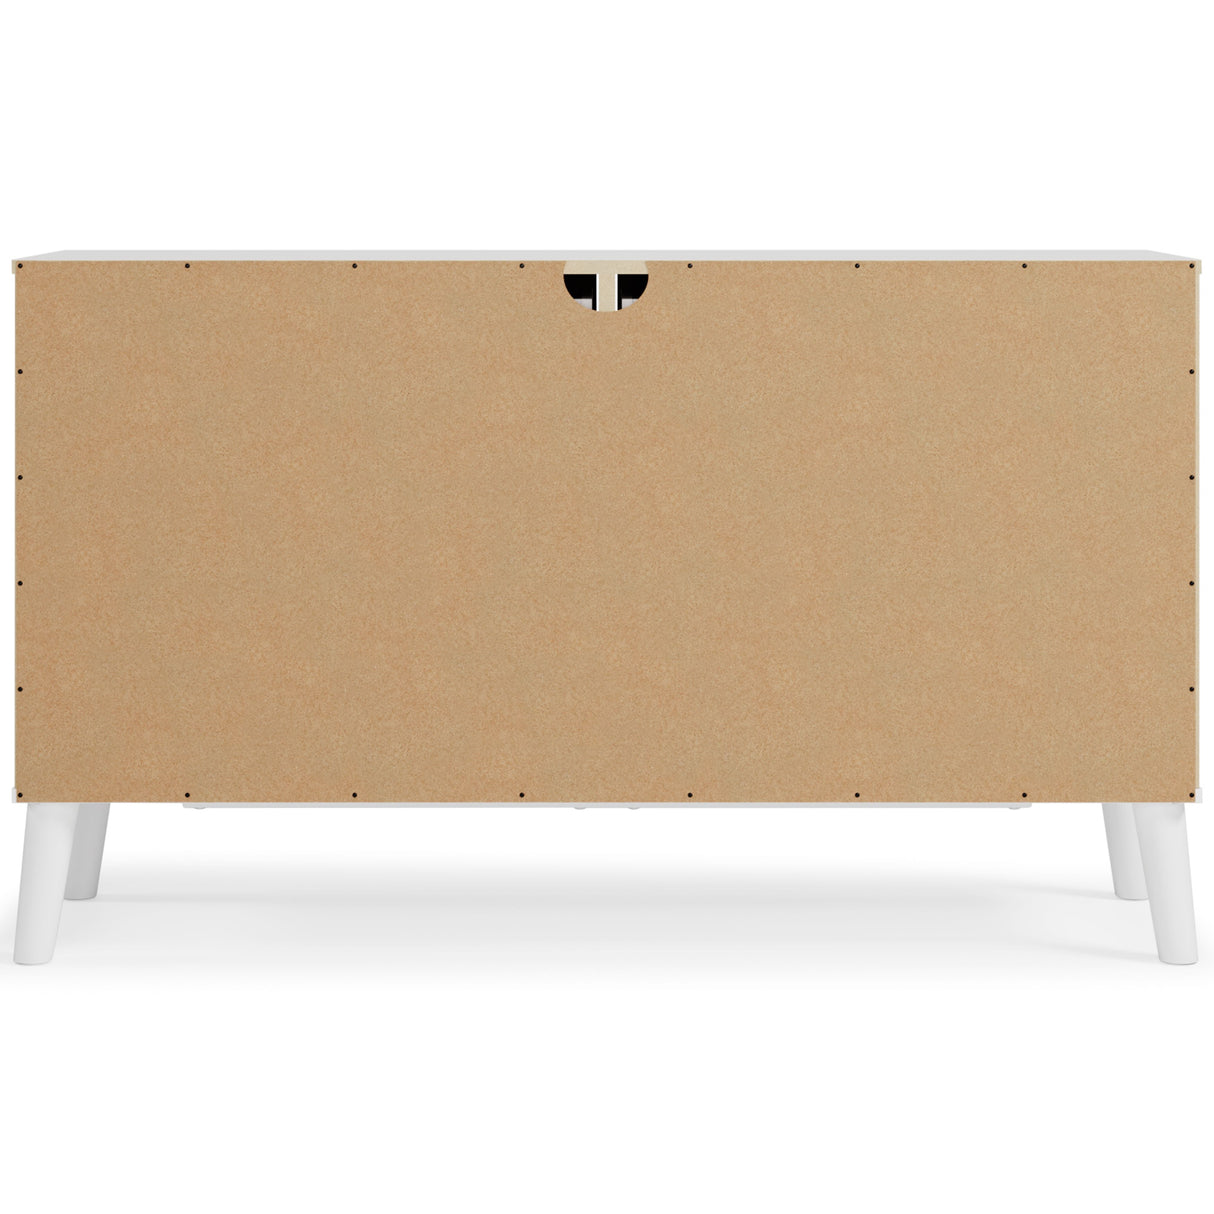 Piperton - Drawer Dresser